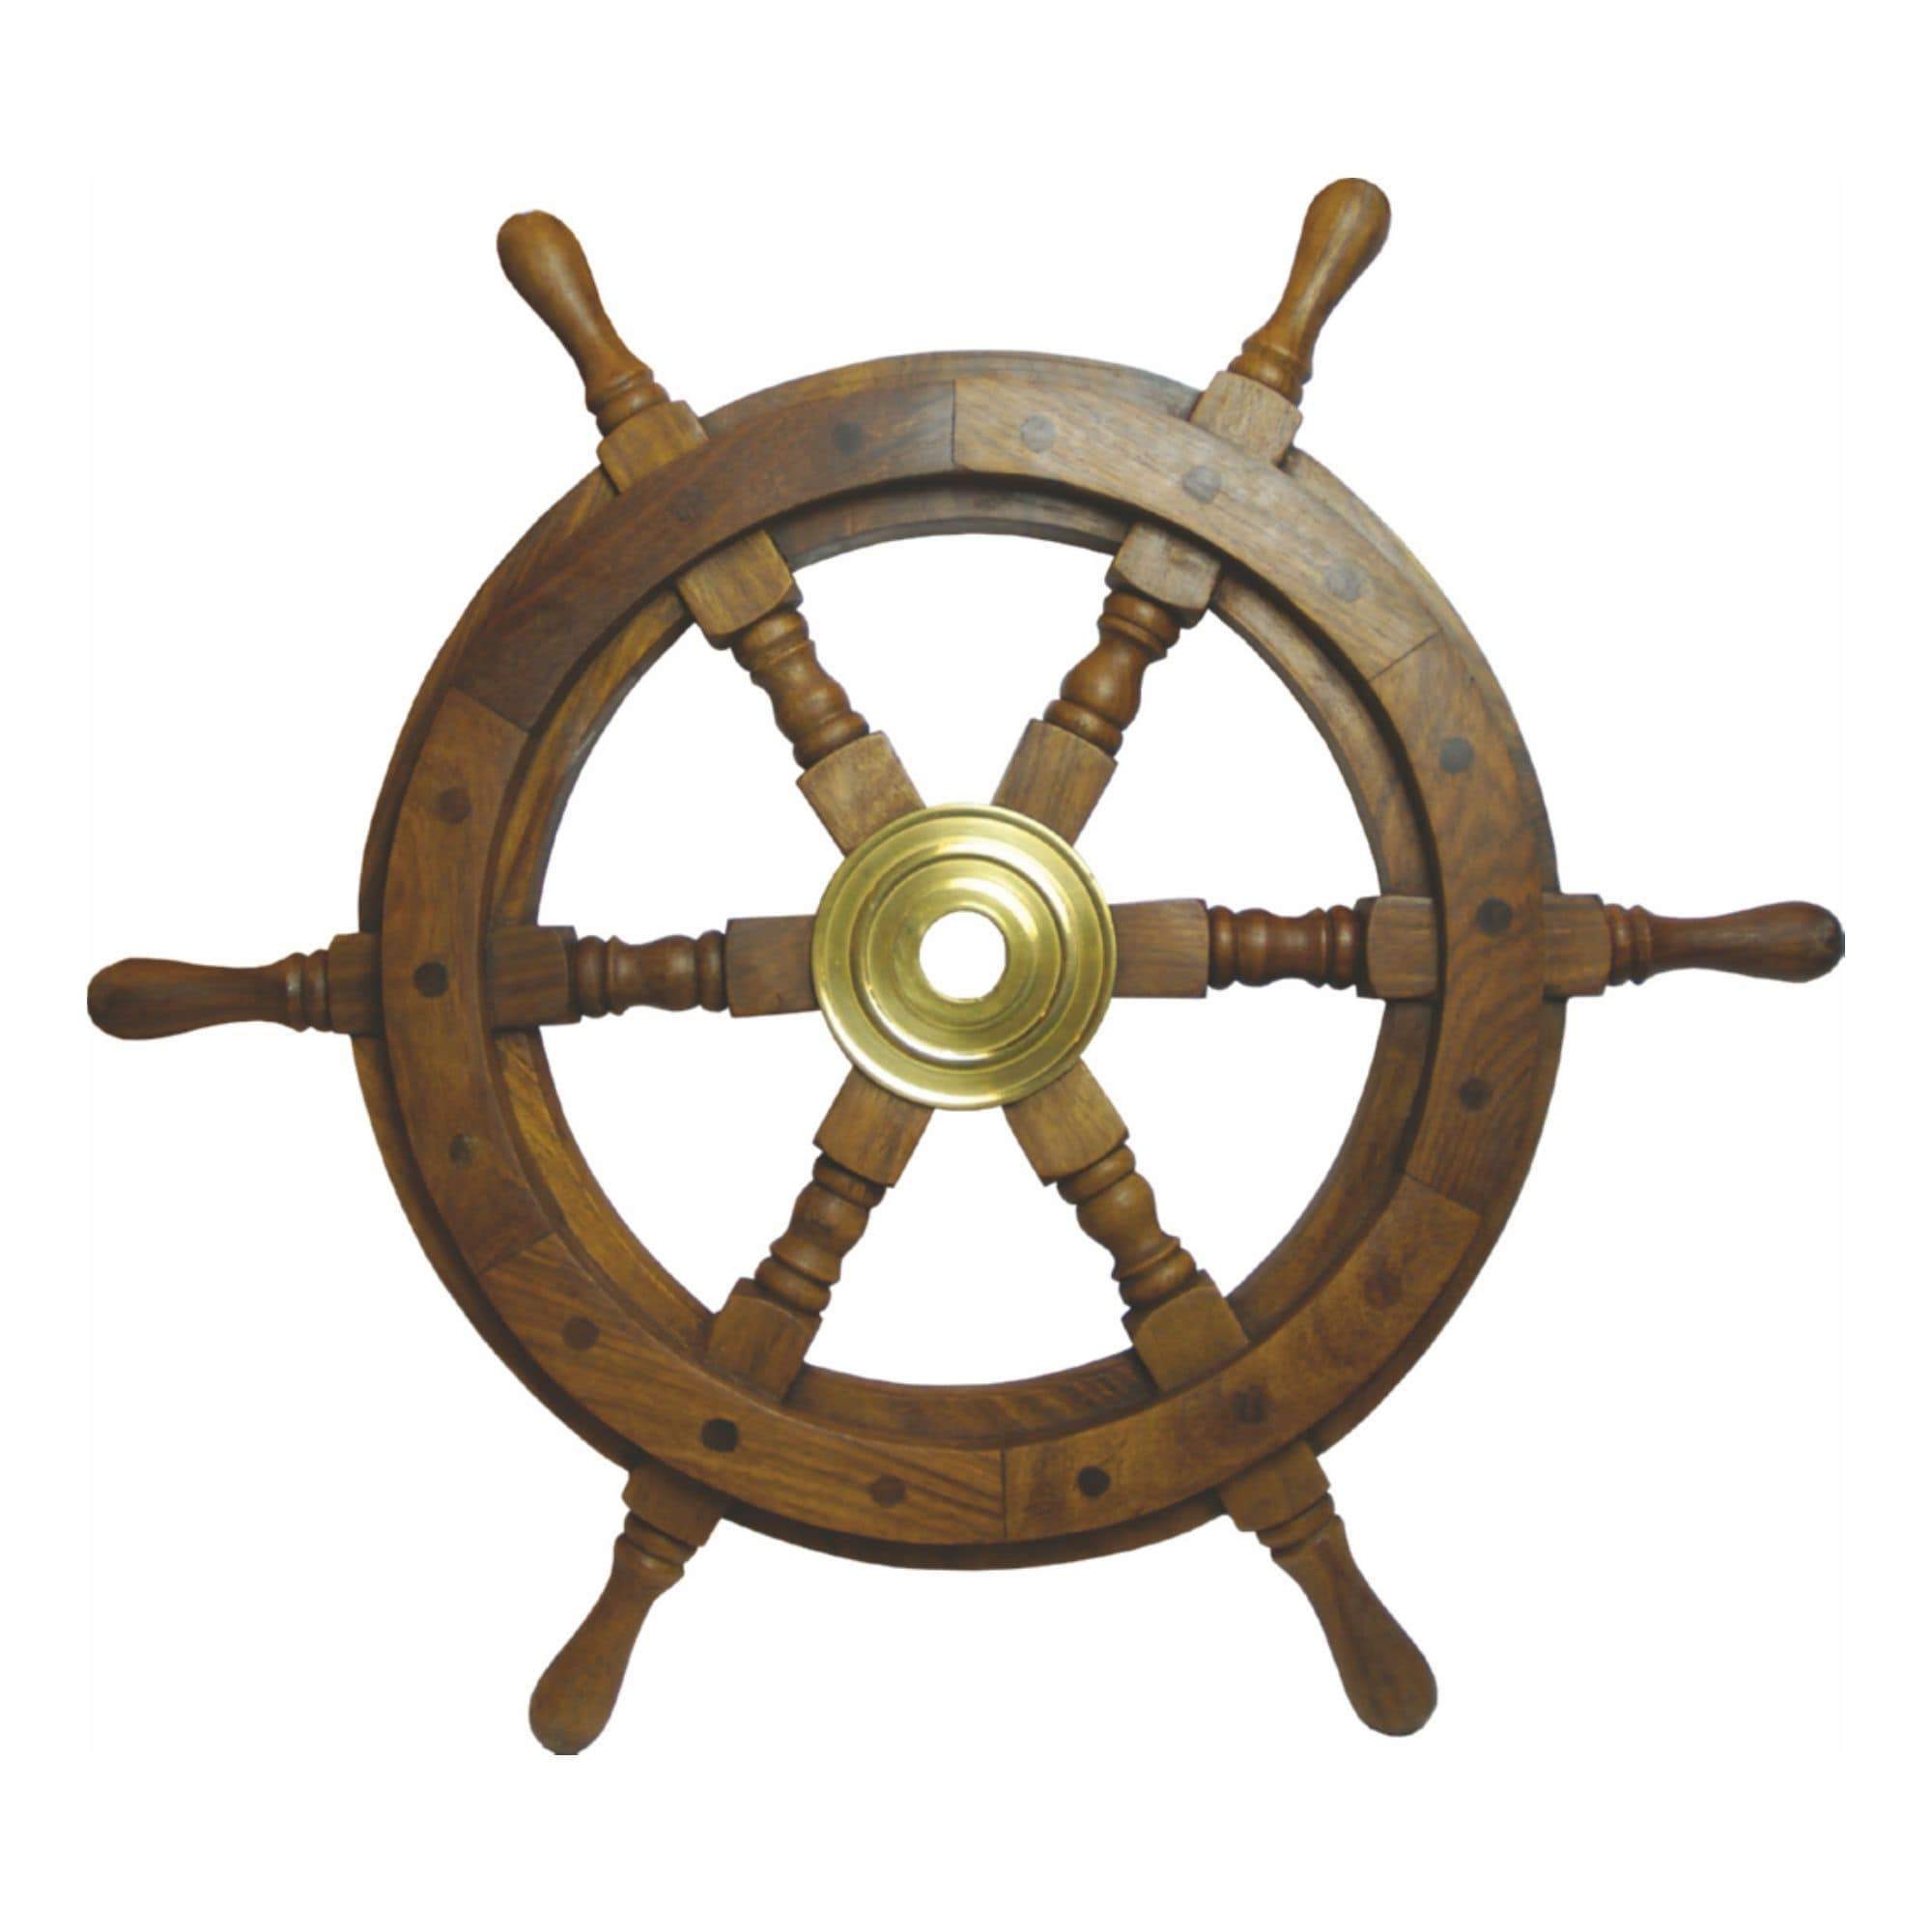 Wooden Ships Wheel – Medium Size